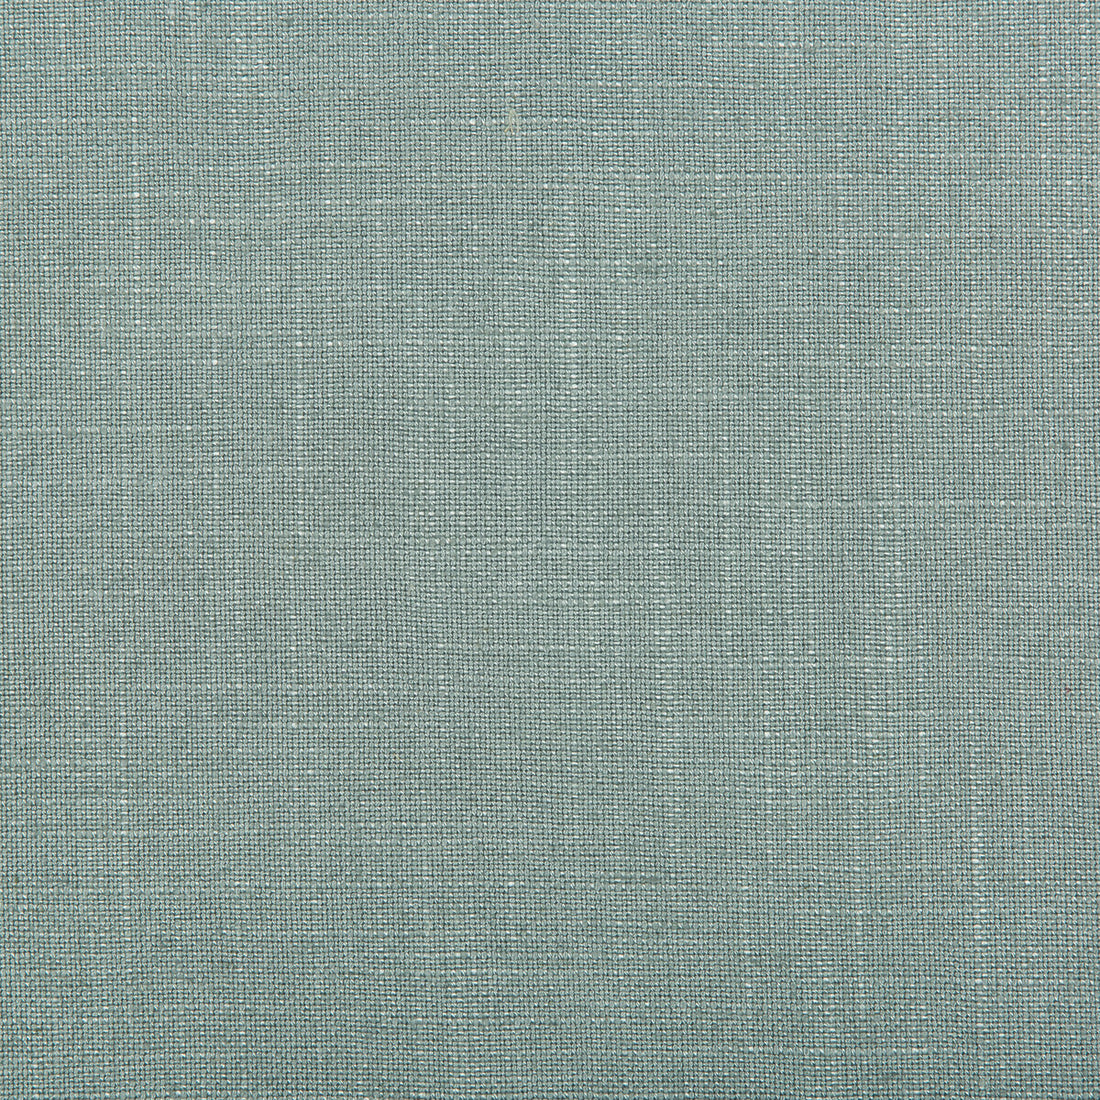 Aura fabric in ocean color - pattern 35520.521.0 - by Kravet Design